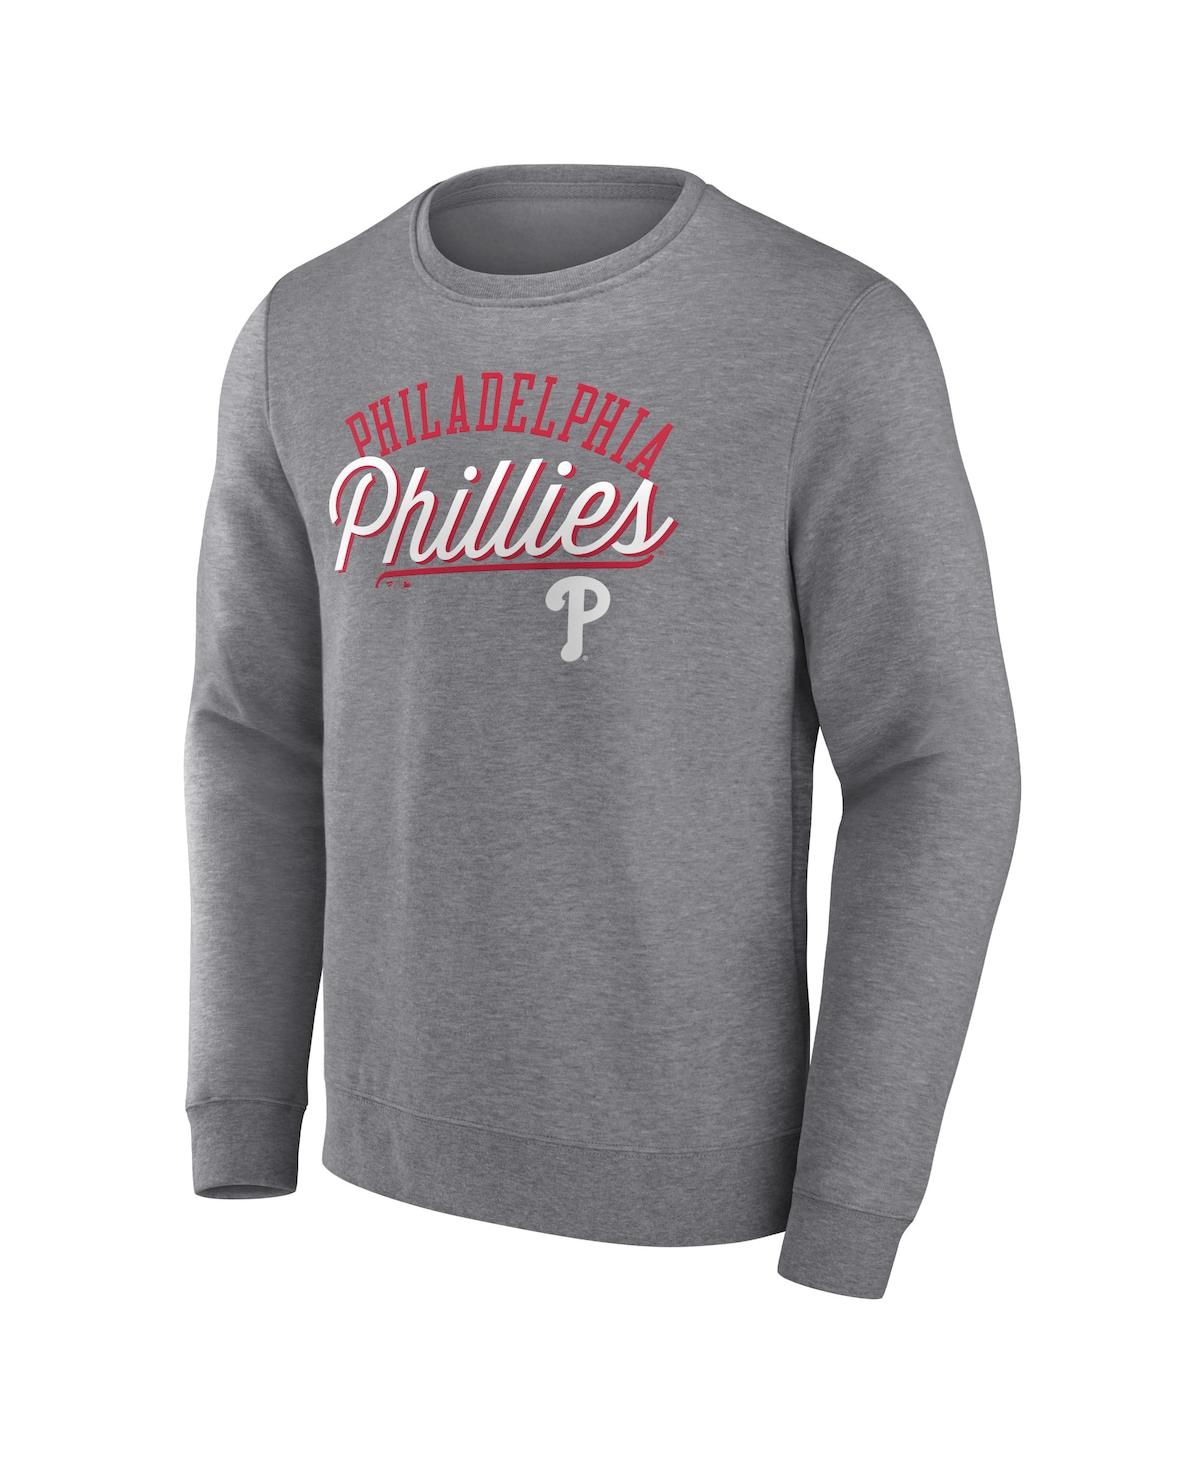 Shop Fanatics Men's  Heather Gray Philadelphia Phillies Simplicity Pullover Sweatshirt